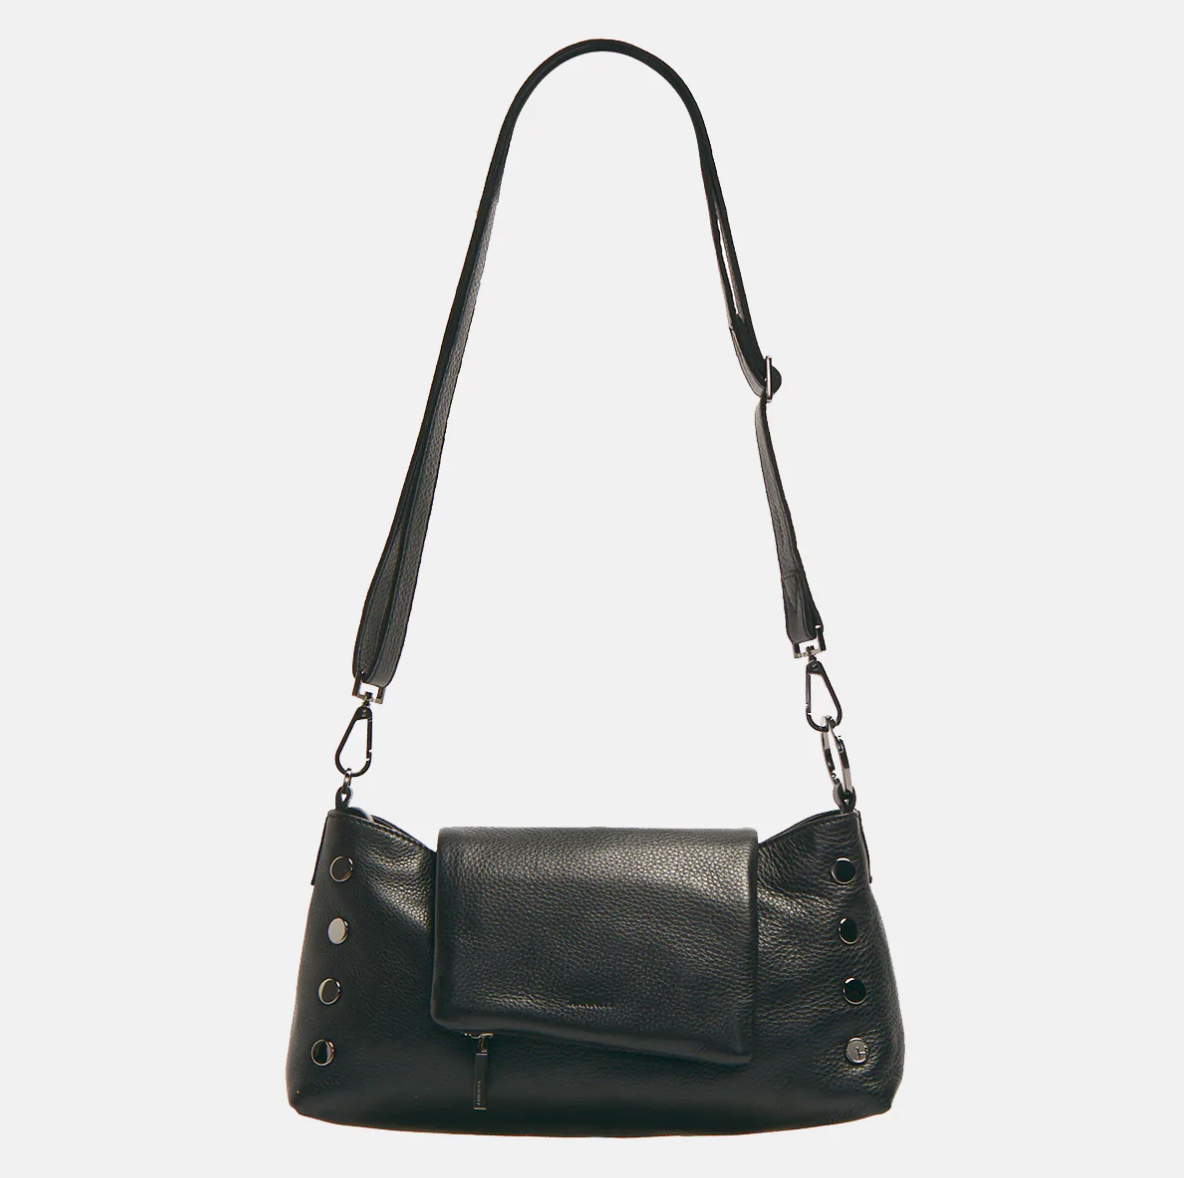 Load image into Gallery viewer, HAMMITT VIP Satchel Leather Shoulder Bag - black/gunmetal
